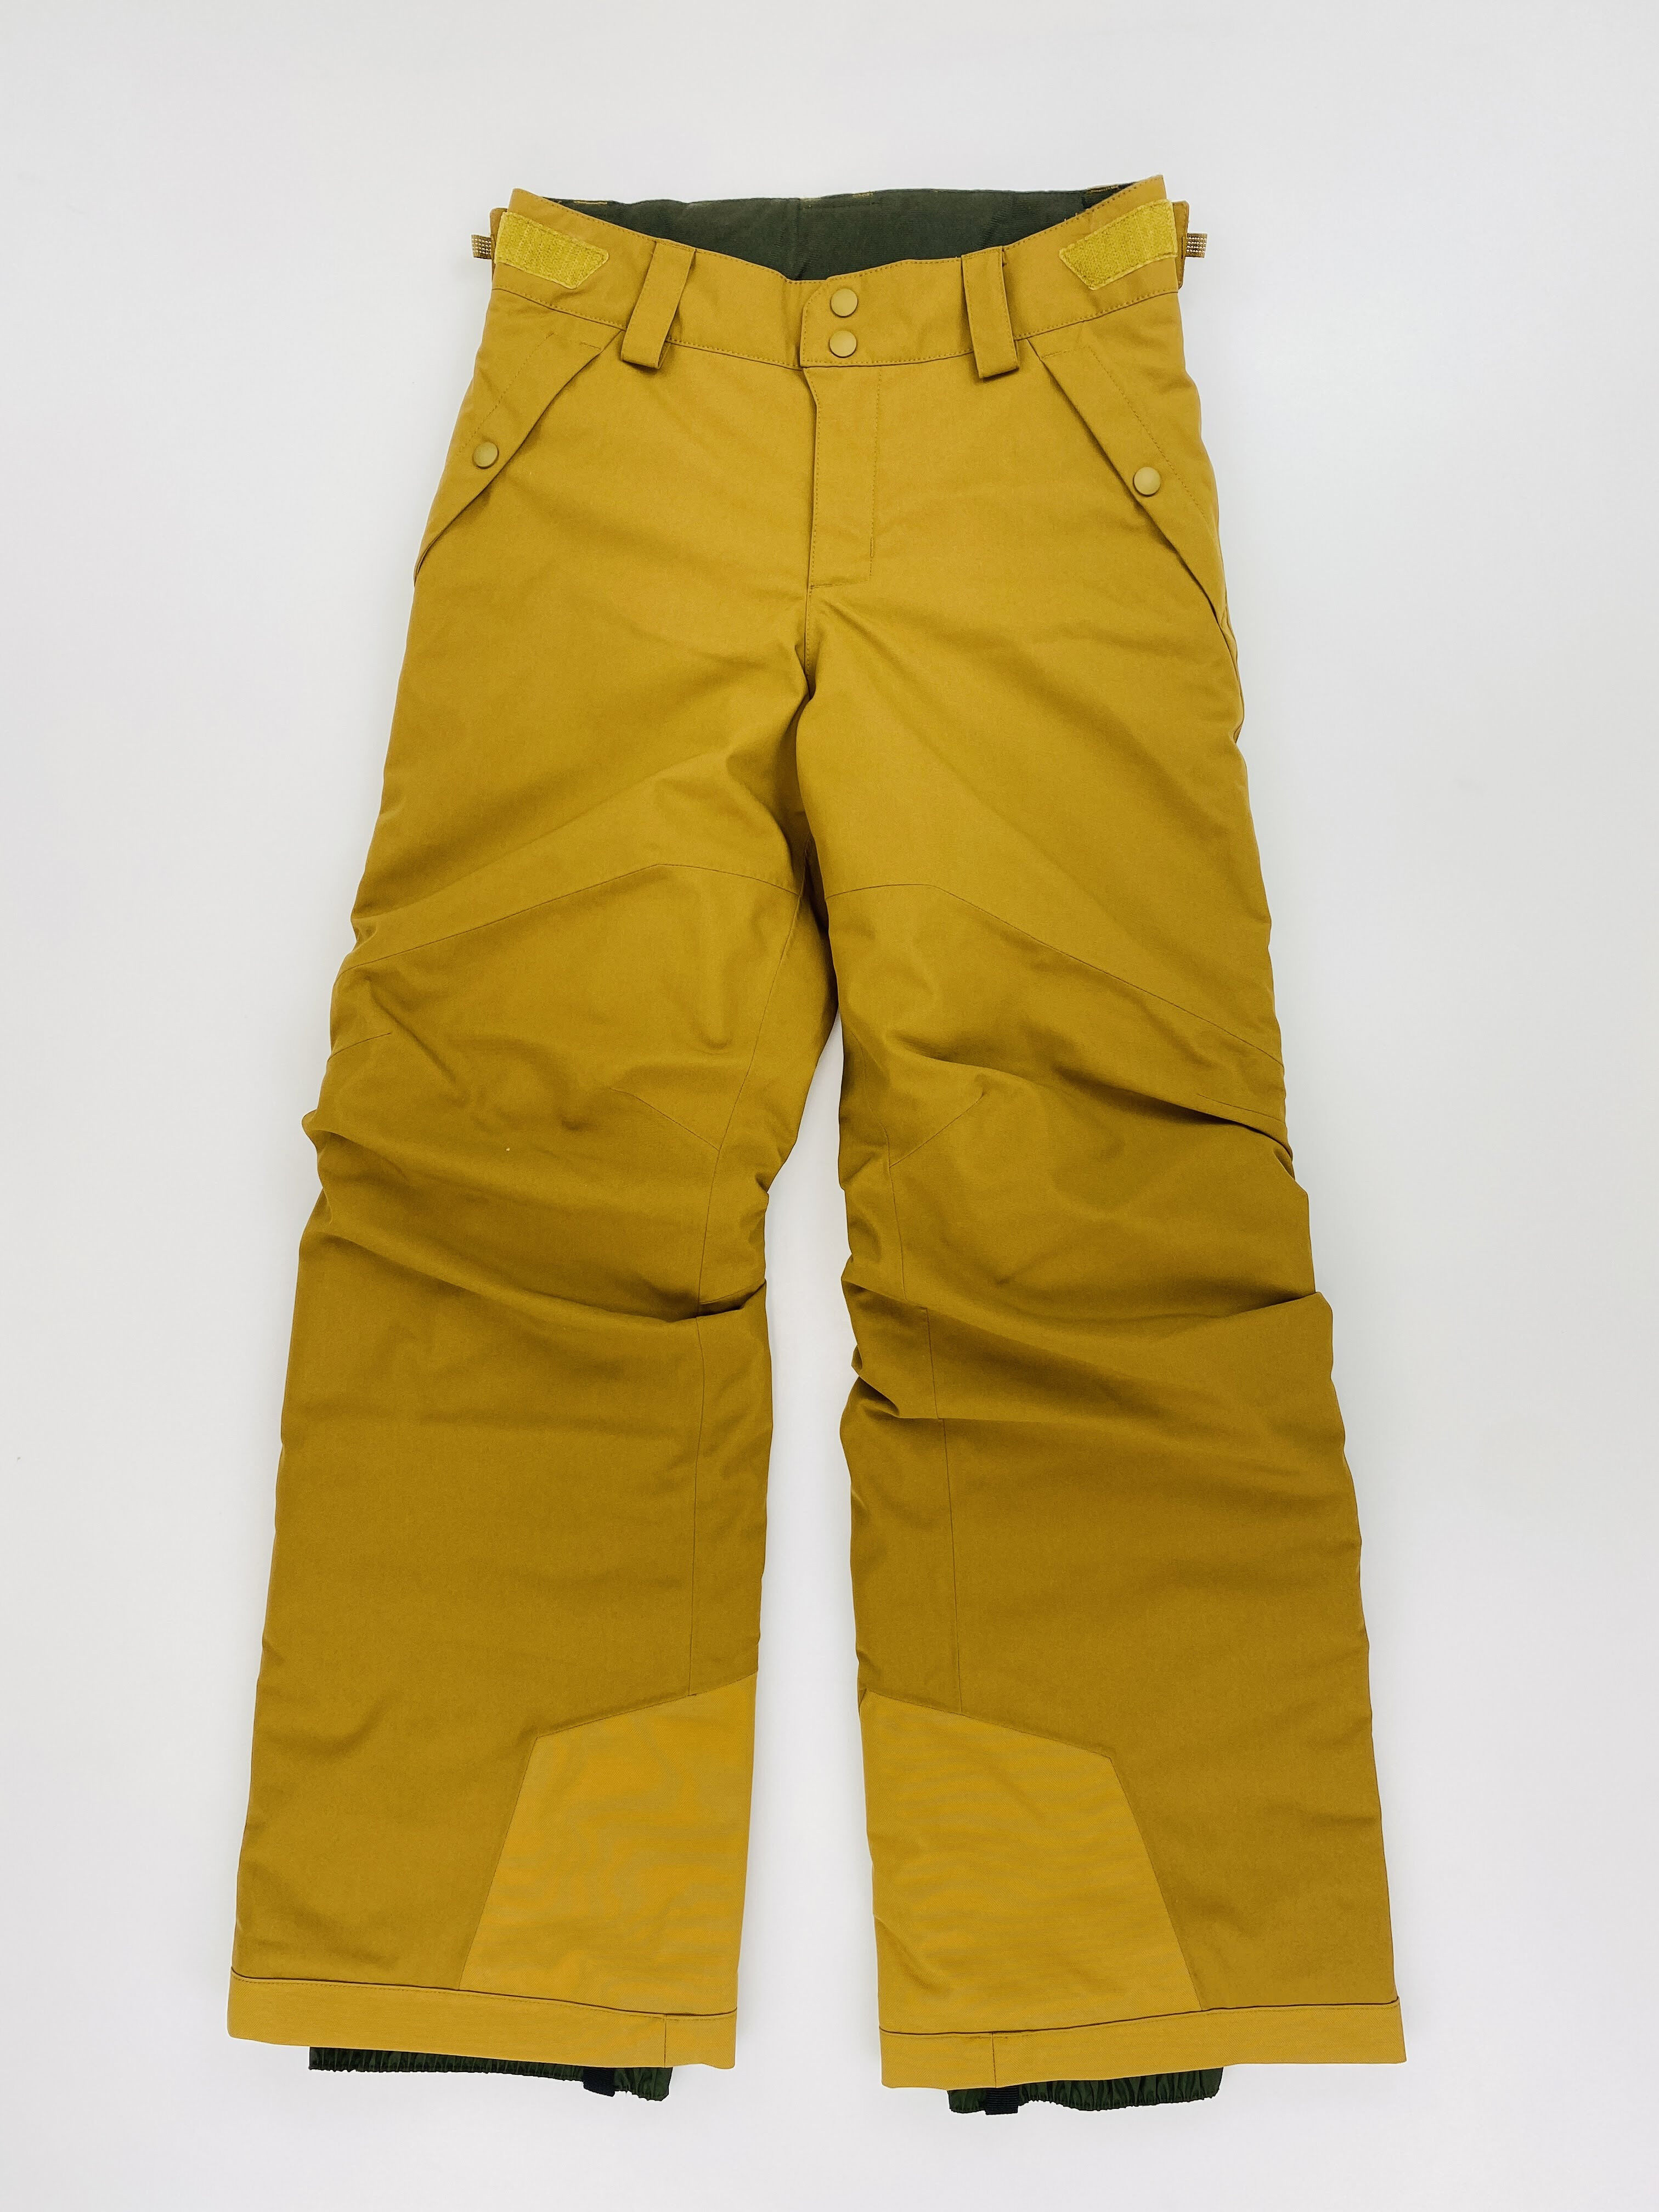 Patagonia Boys' Everyday Ready Pants - Second Hand Ski trousers - Kid's - Brown - M | Hardloop